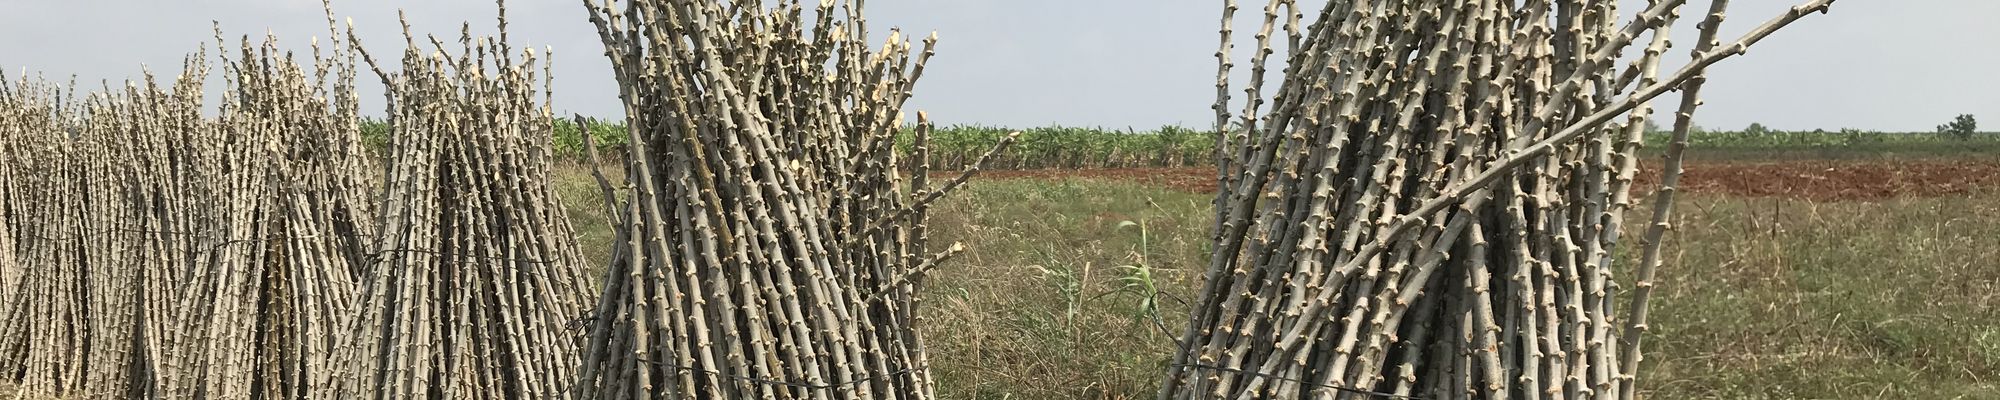 Tiges de manioc pour la plantation au Cambodge. © R. Cardinael, Cirad